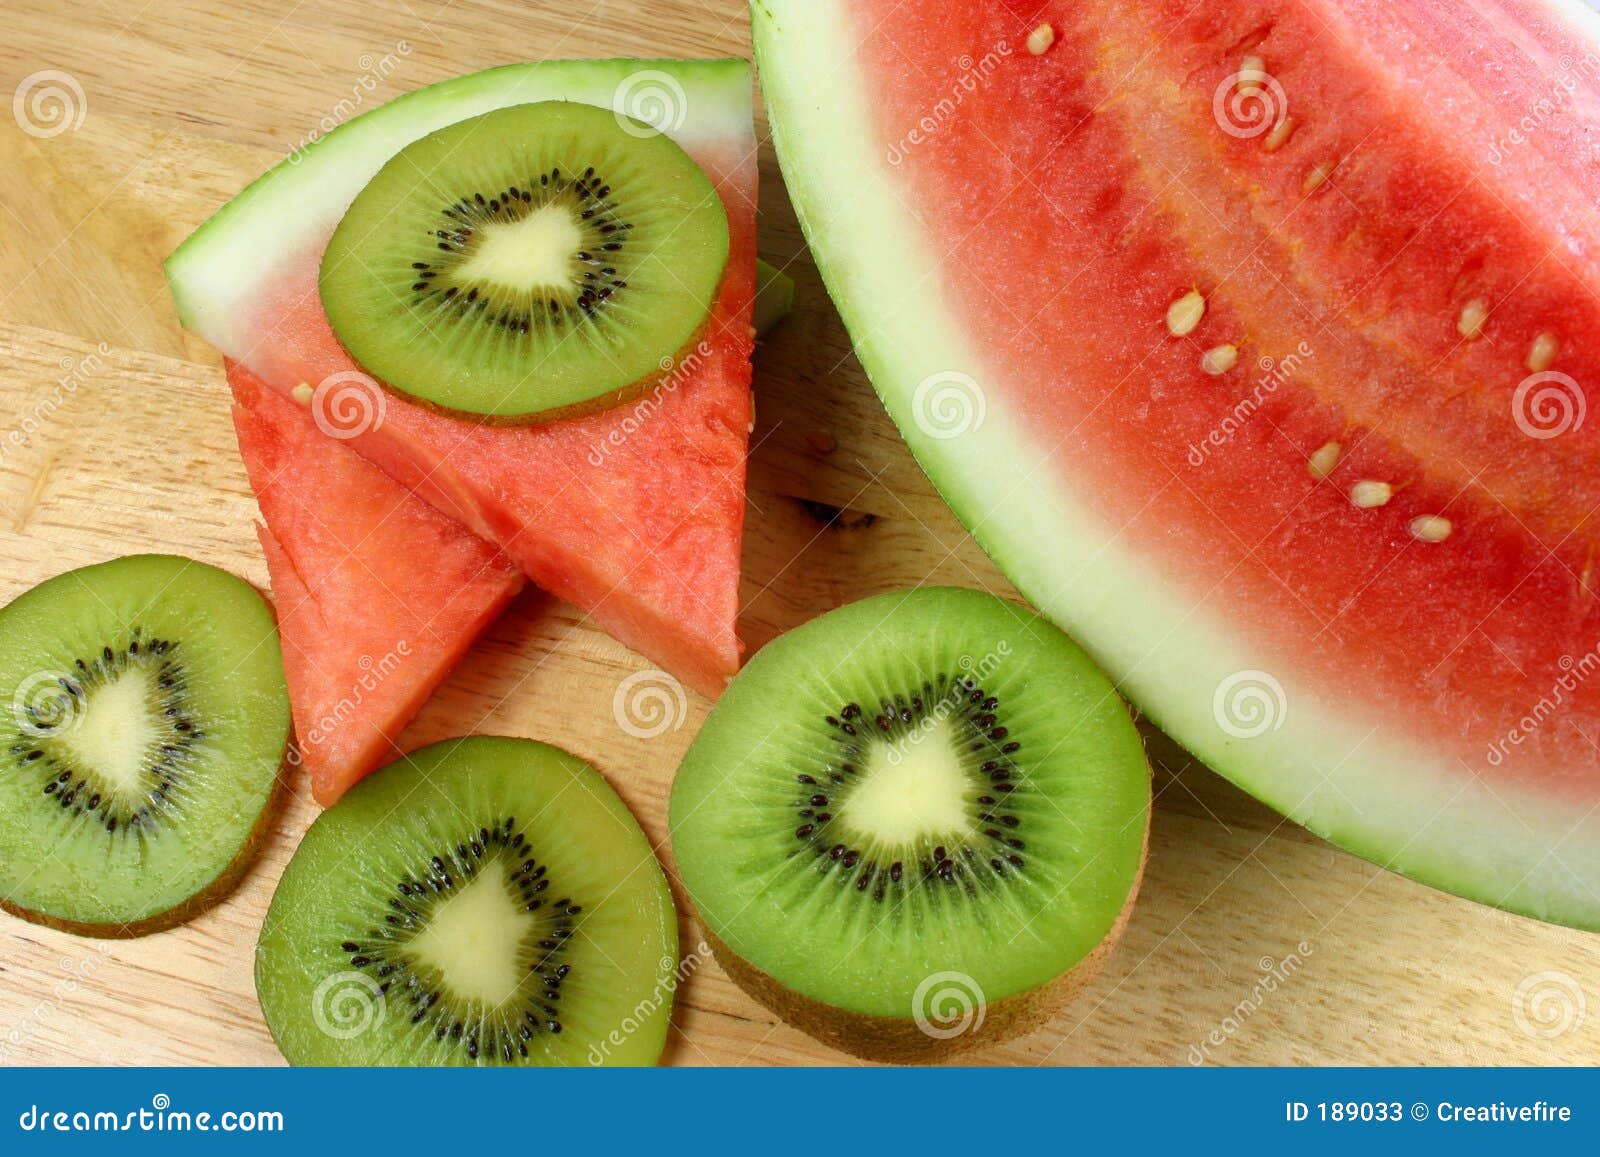 Kiwi and Watermelon Nail Art Ideas - wide 2